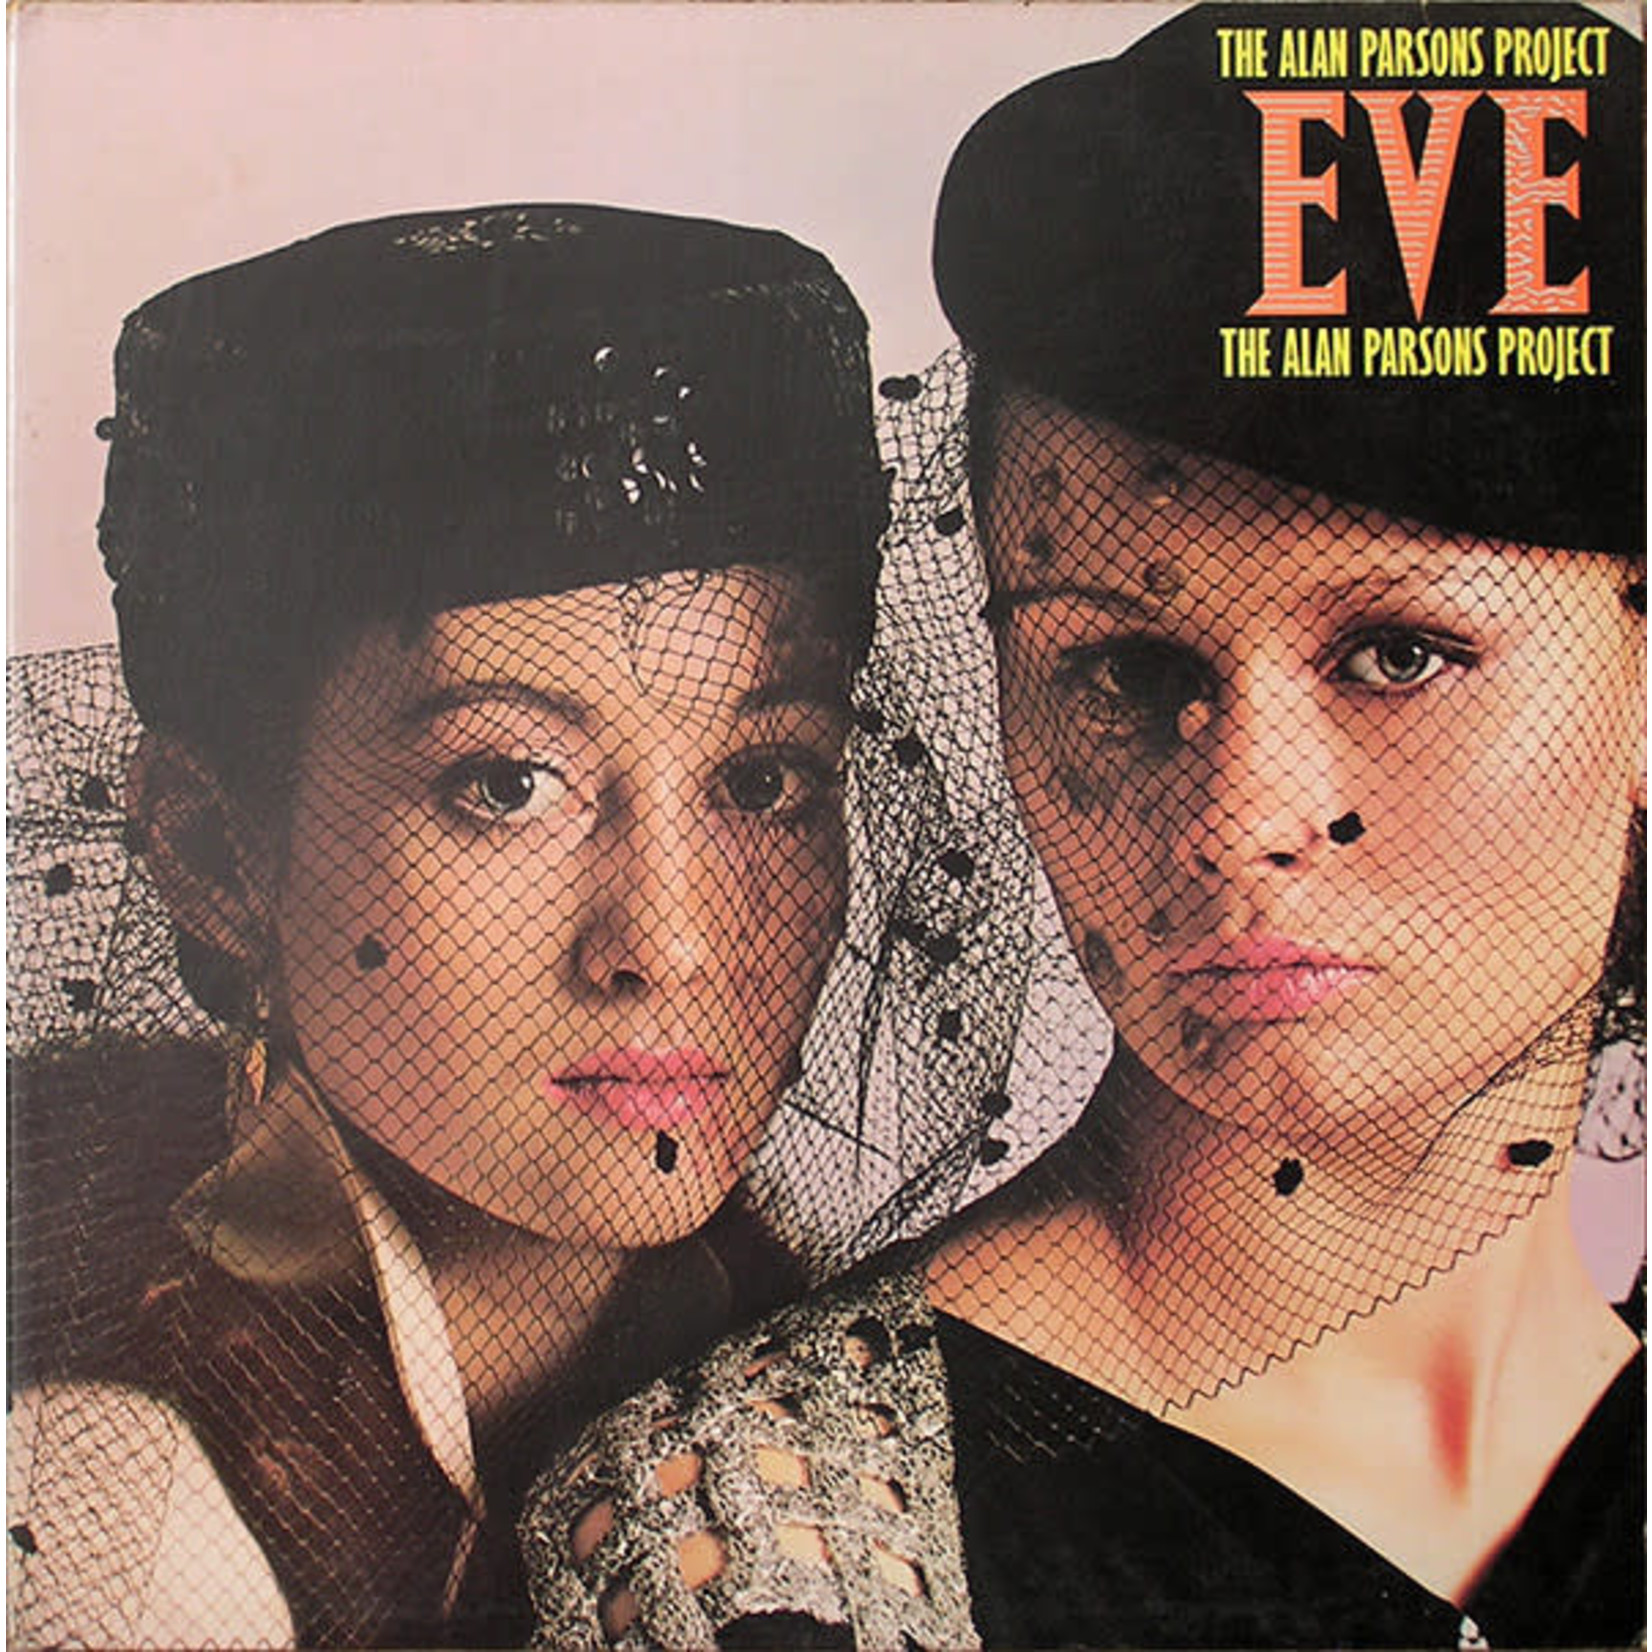 [Vintage] Alan Parsons - Eve